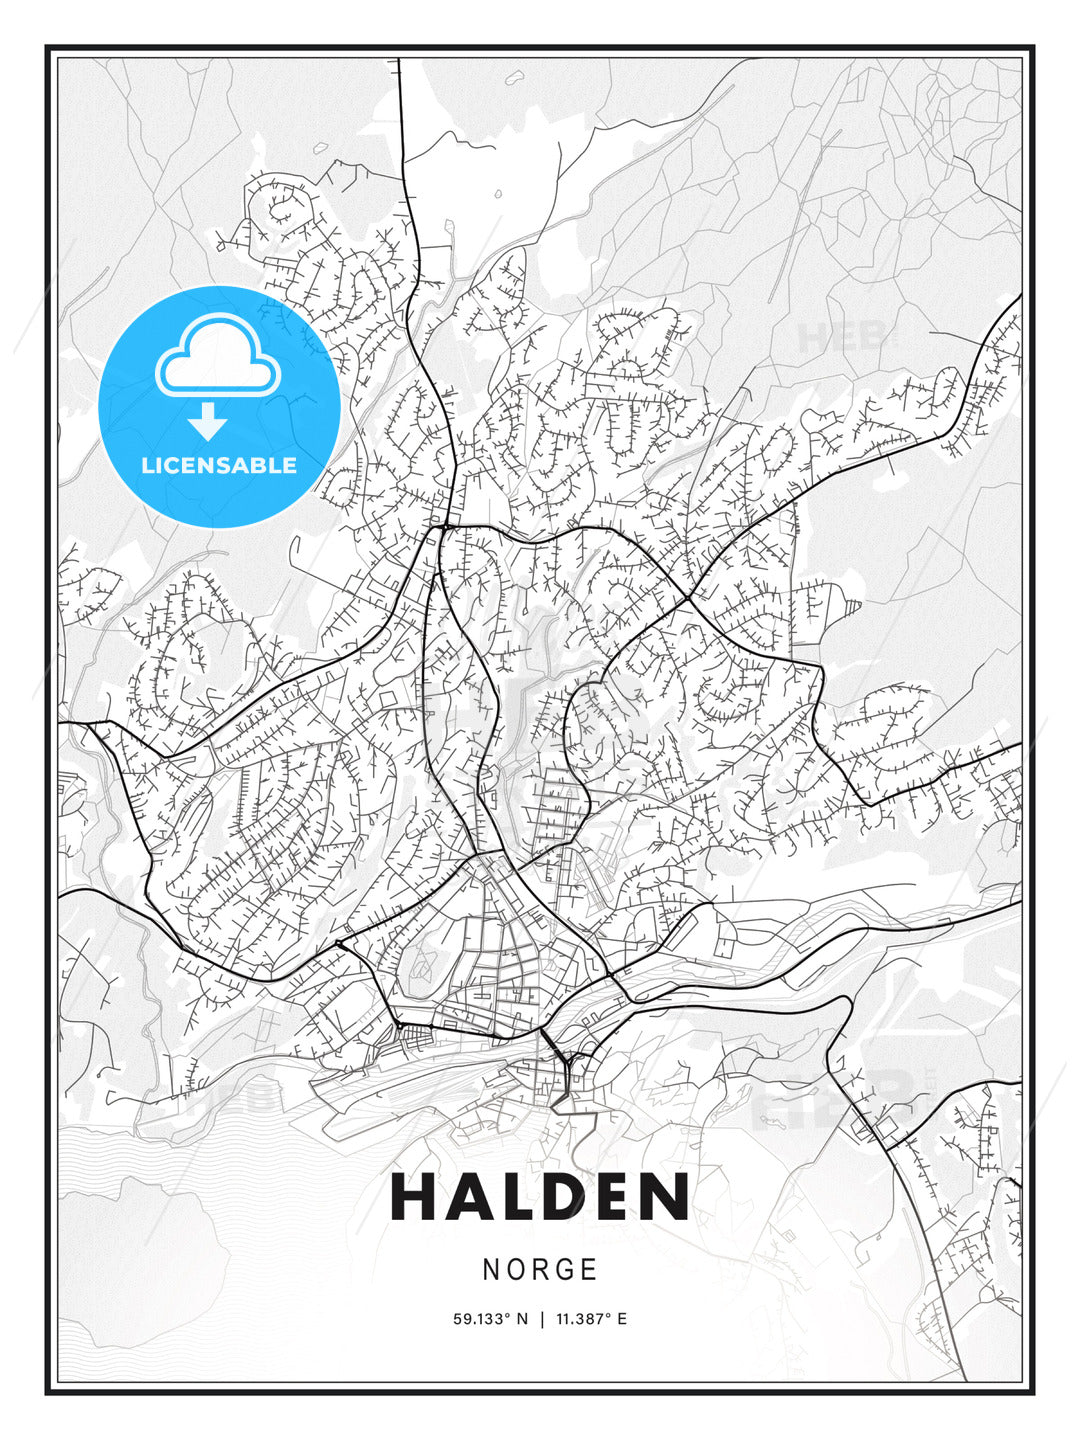 Halden, Norway, Modern Print Template in Various Formats - HEBSTREITS Sketches